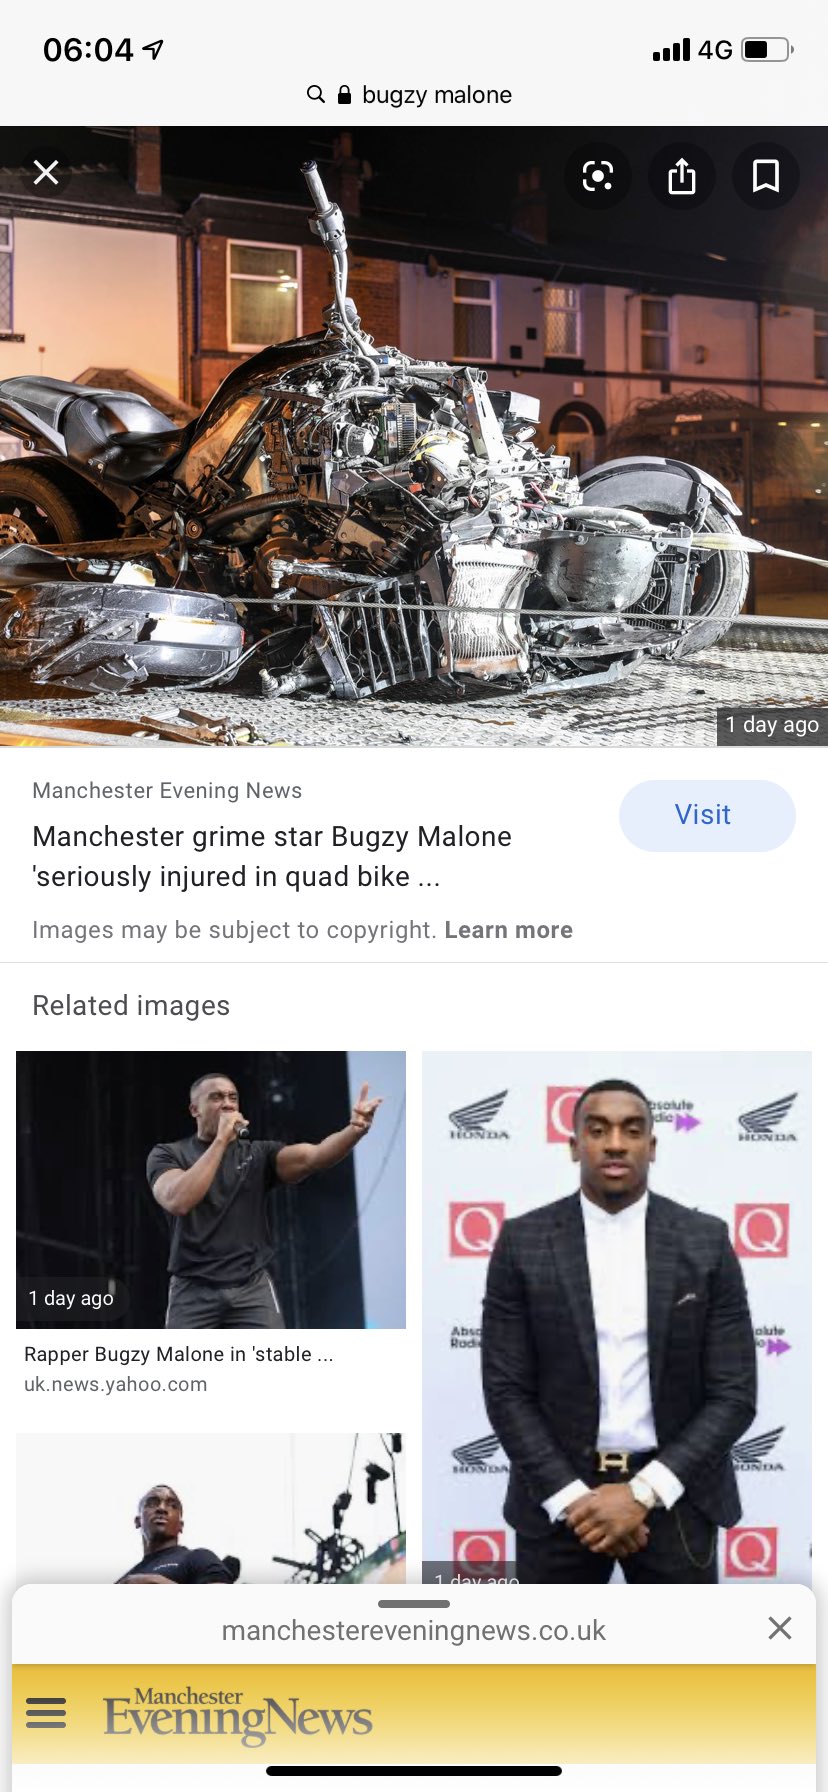 Rapper Bugzy Malone 'seriously injured' in quad bike crash - The